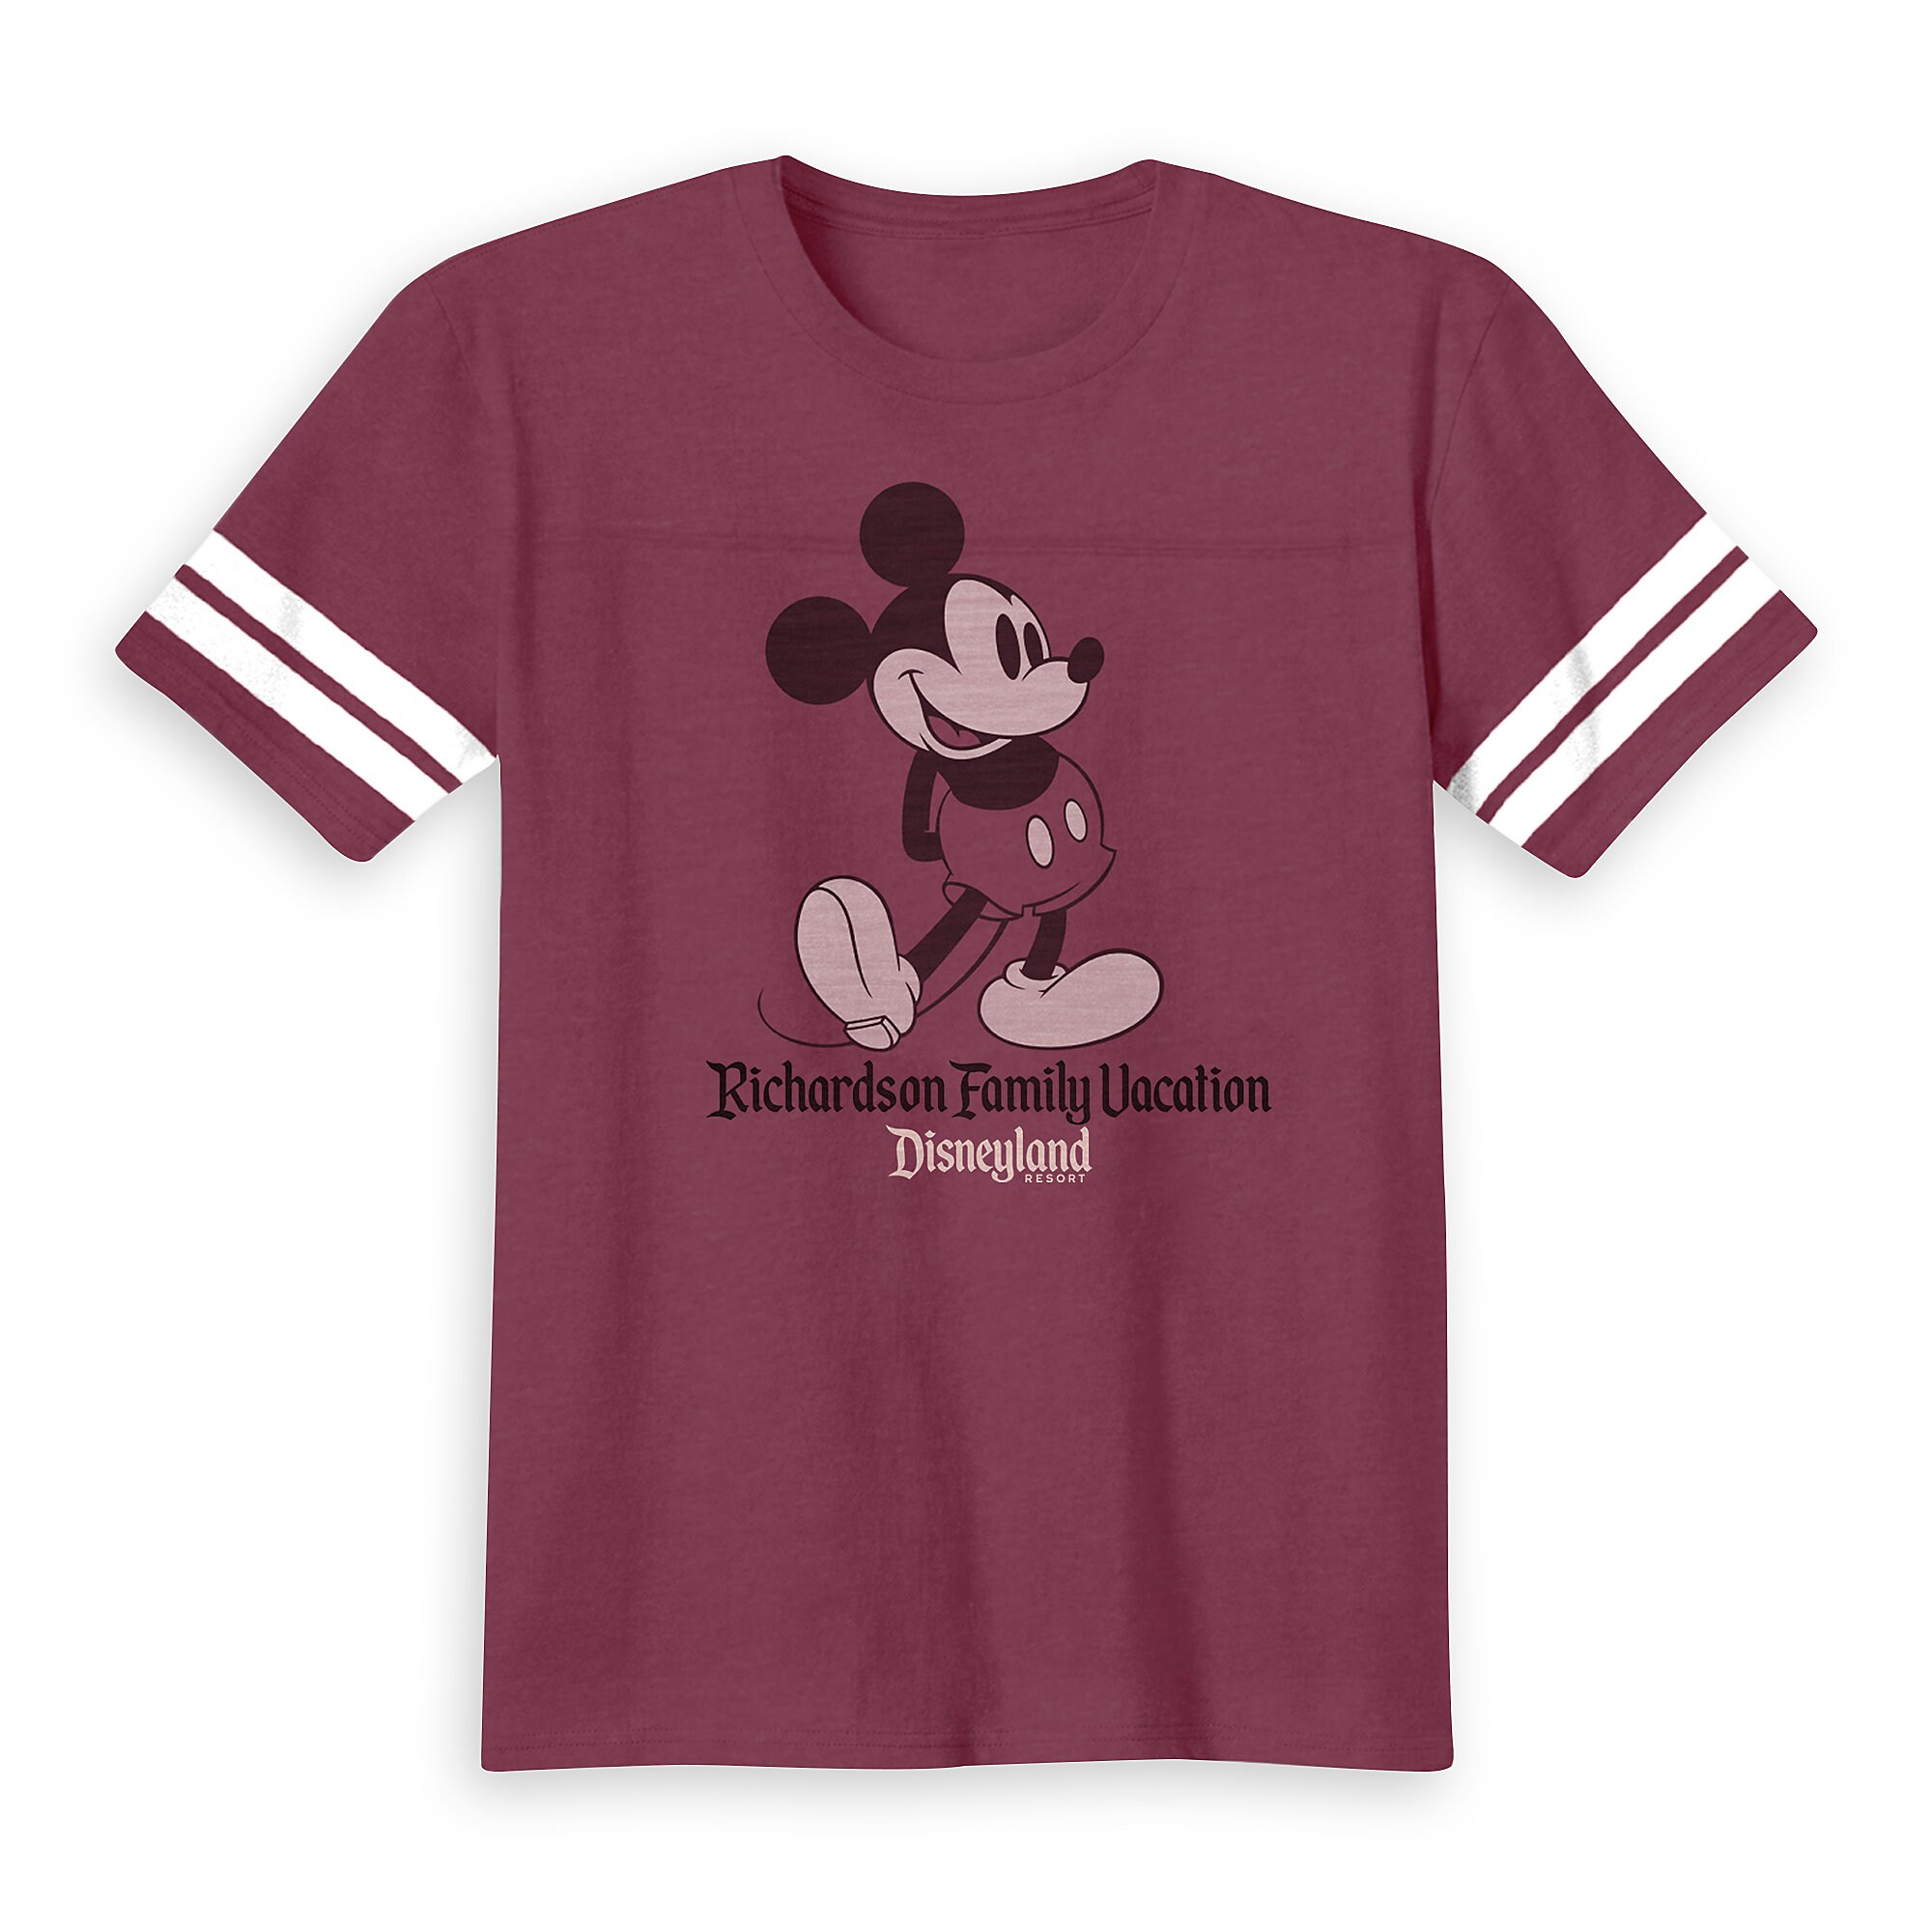 Kids' Mickey Mouse Family Vacation Heathered Football T-Shirt - Disneyland - Customized